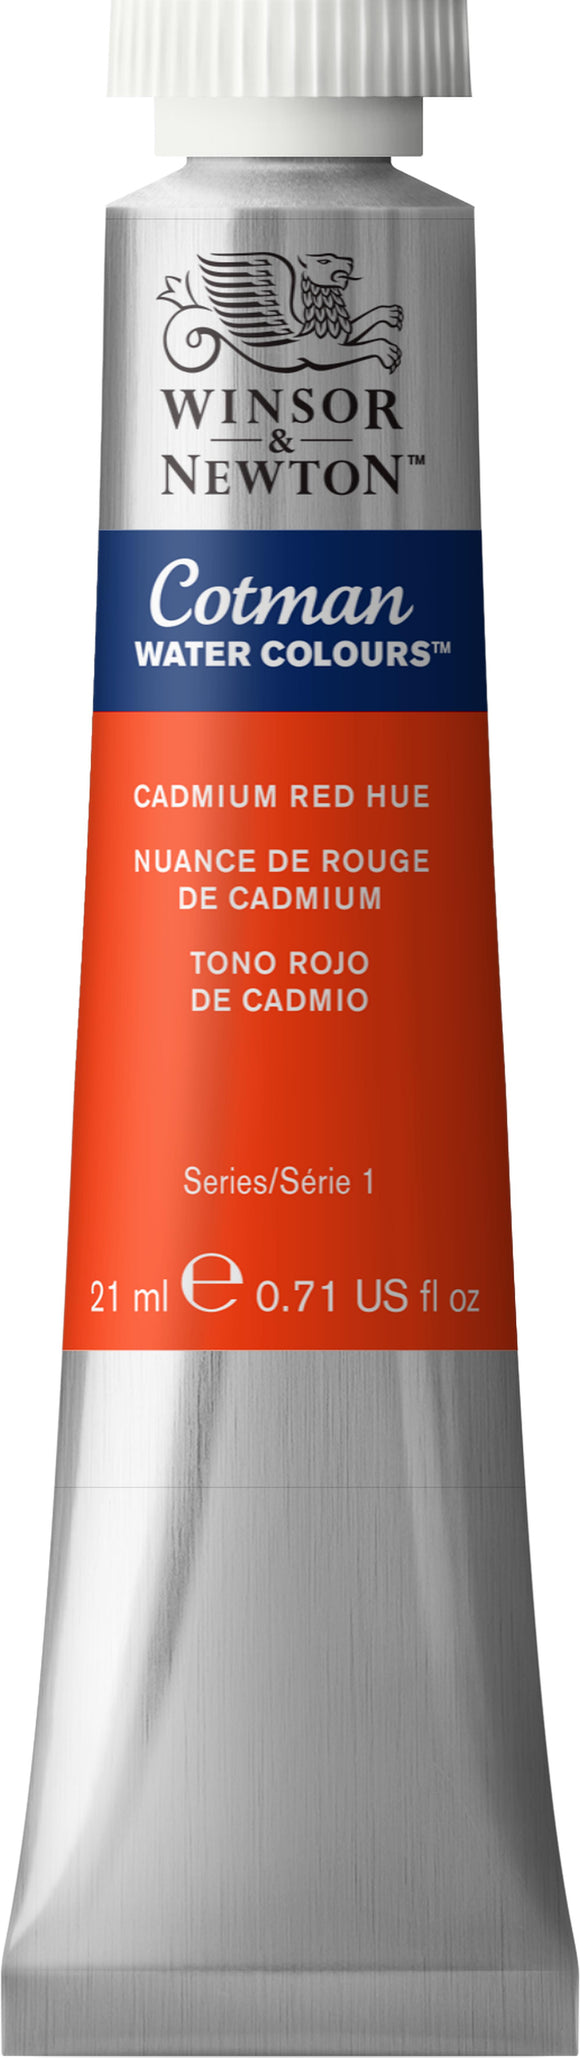 Winsor & Newton Cotman Watercolour Cadmium Red Hue 21Ml